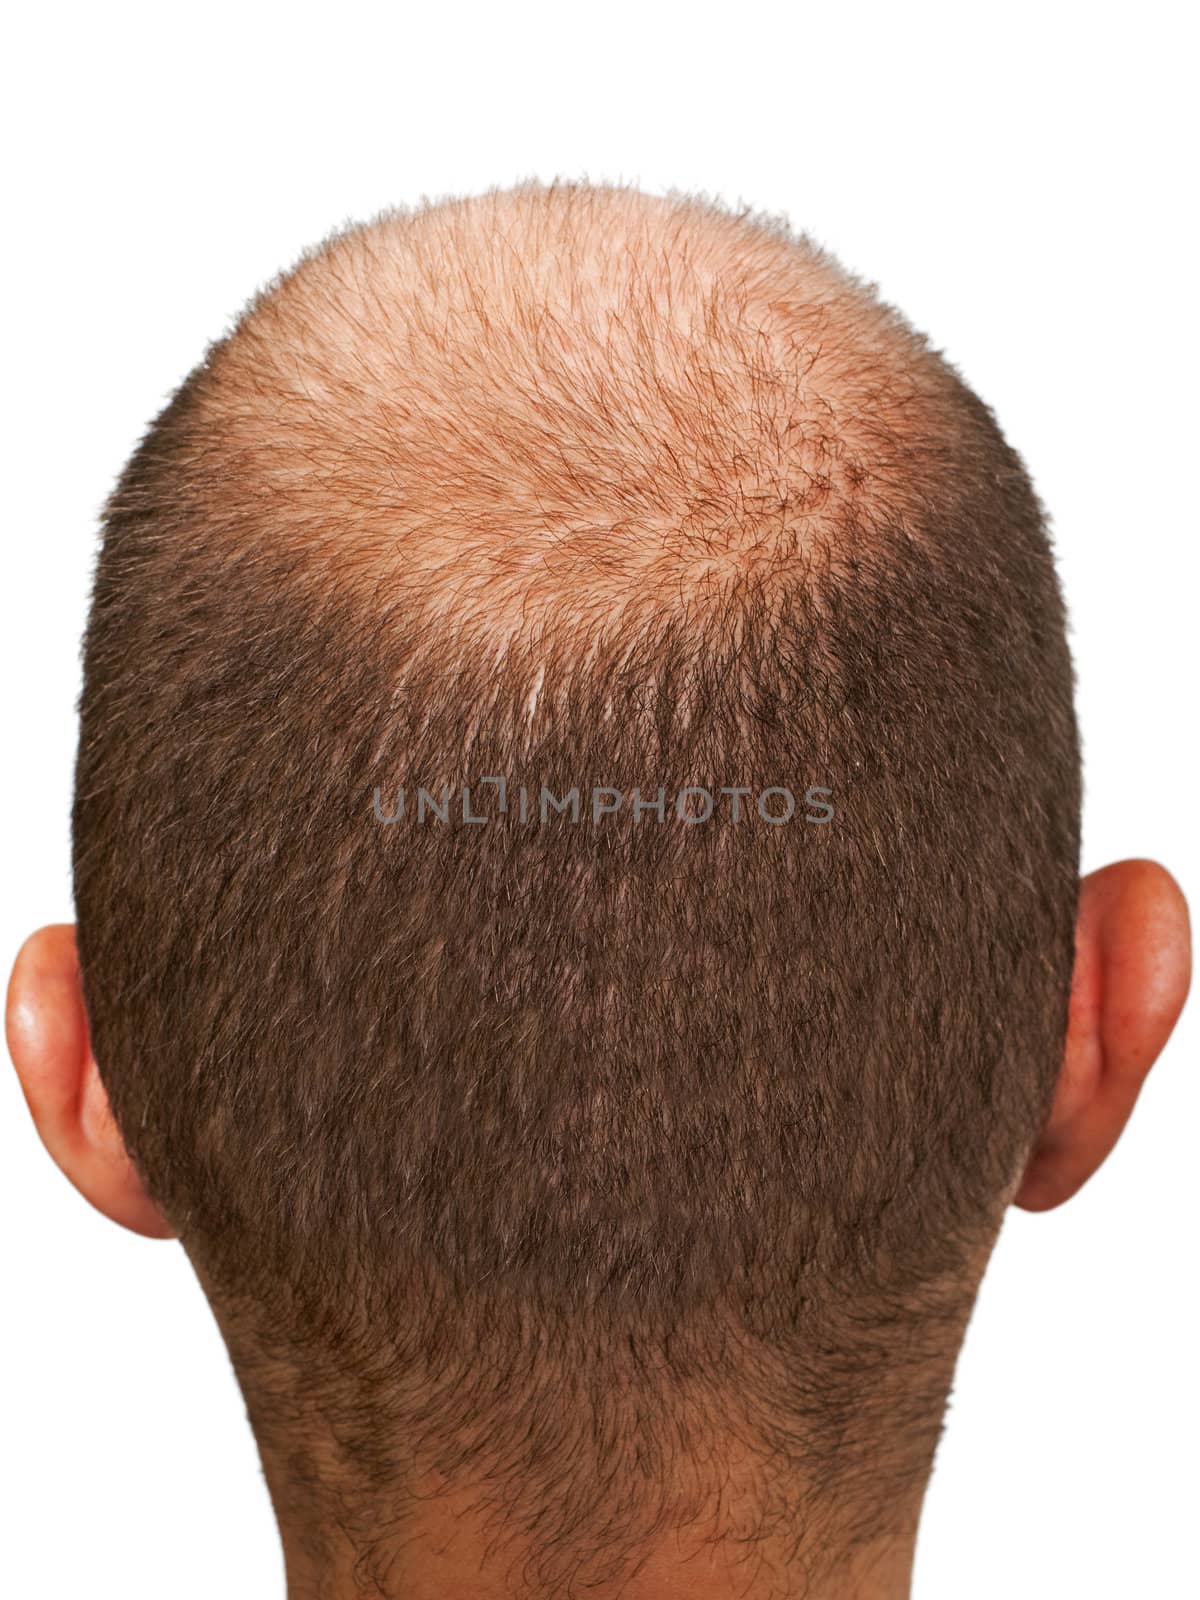 Bald hair head of adult men completely balding